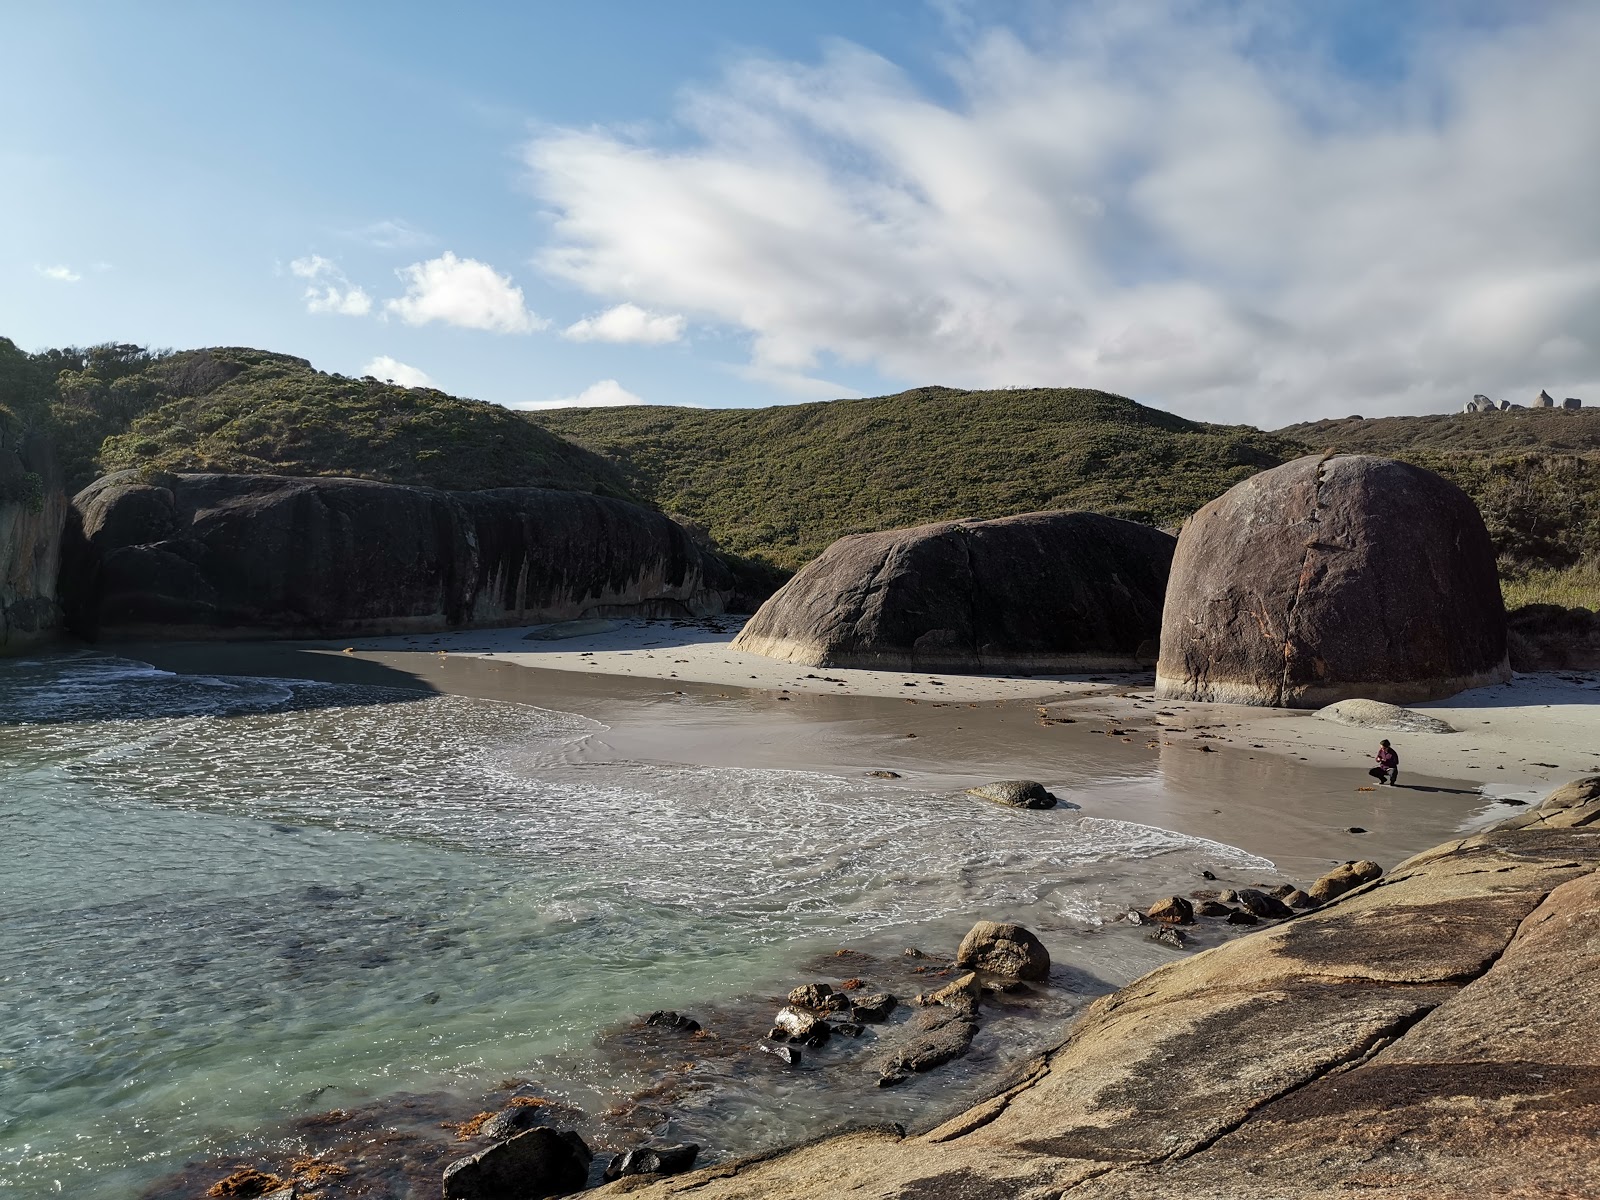 Foto di Elephant Rocks Beach ubicato in zona naturale